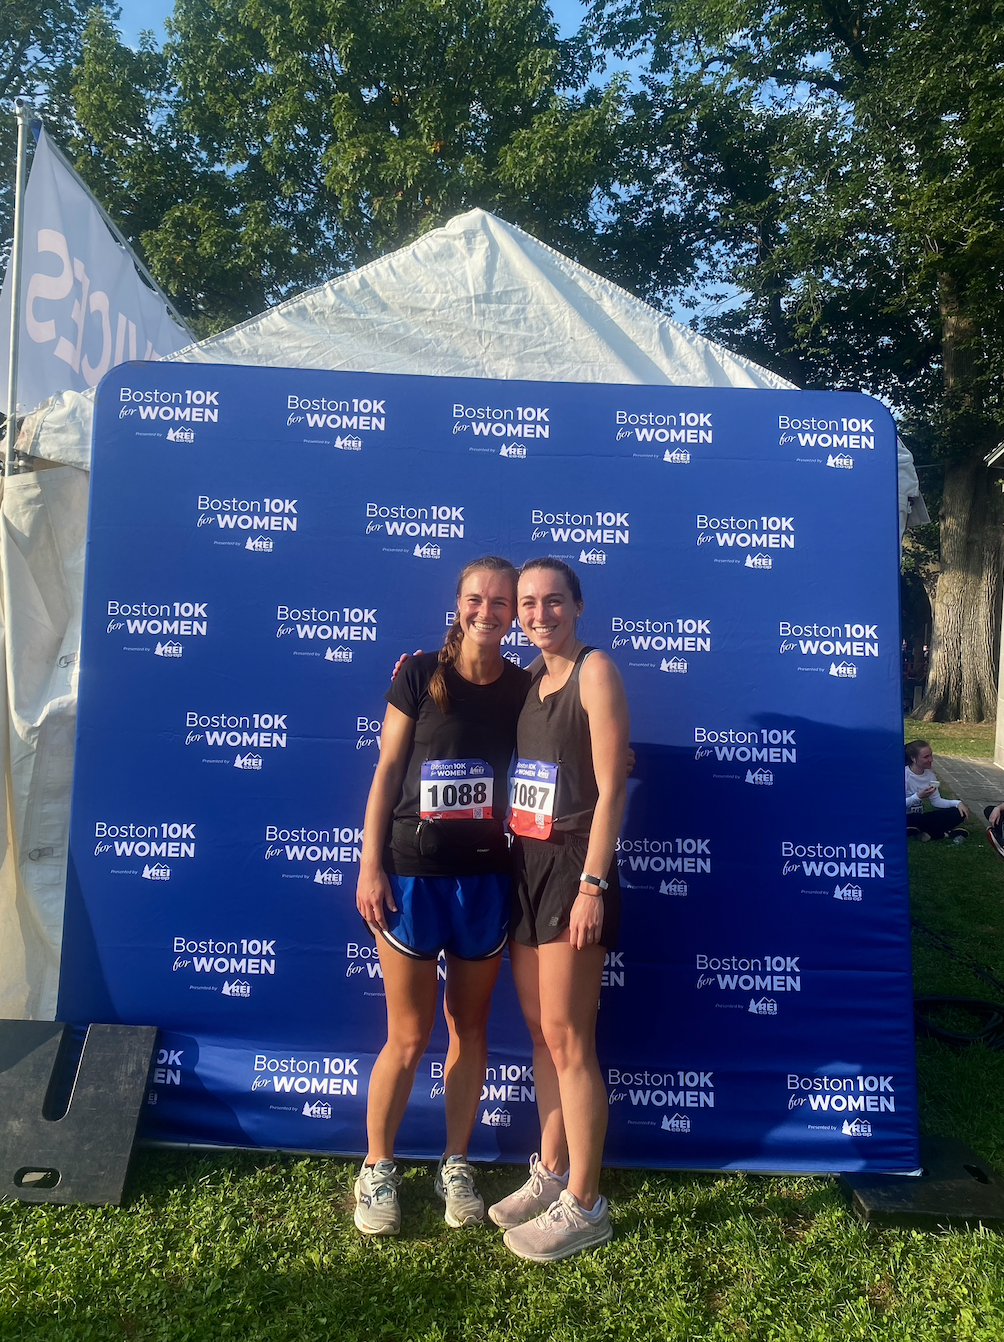 Boston 10k Run for Women with my Chicago-Marathon partner and best running buddy, Kenz!